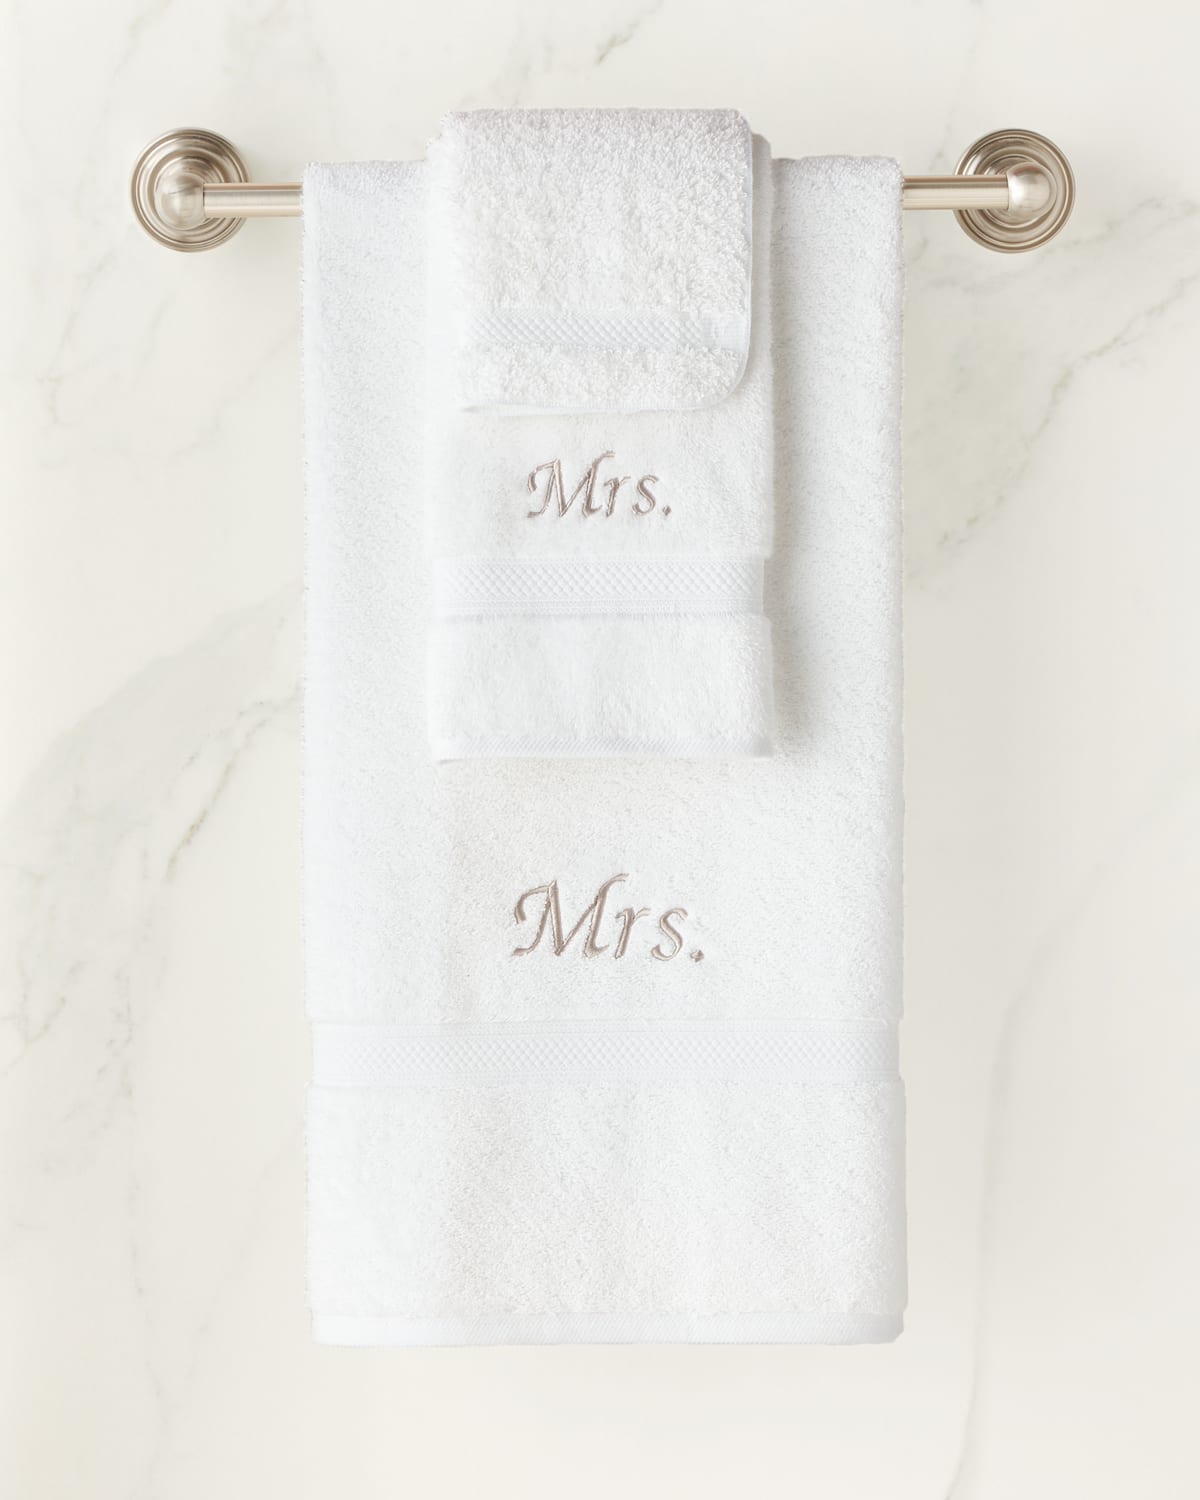 Mrs. and Mrs. Six-Piece Cotton Towel Set